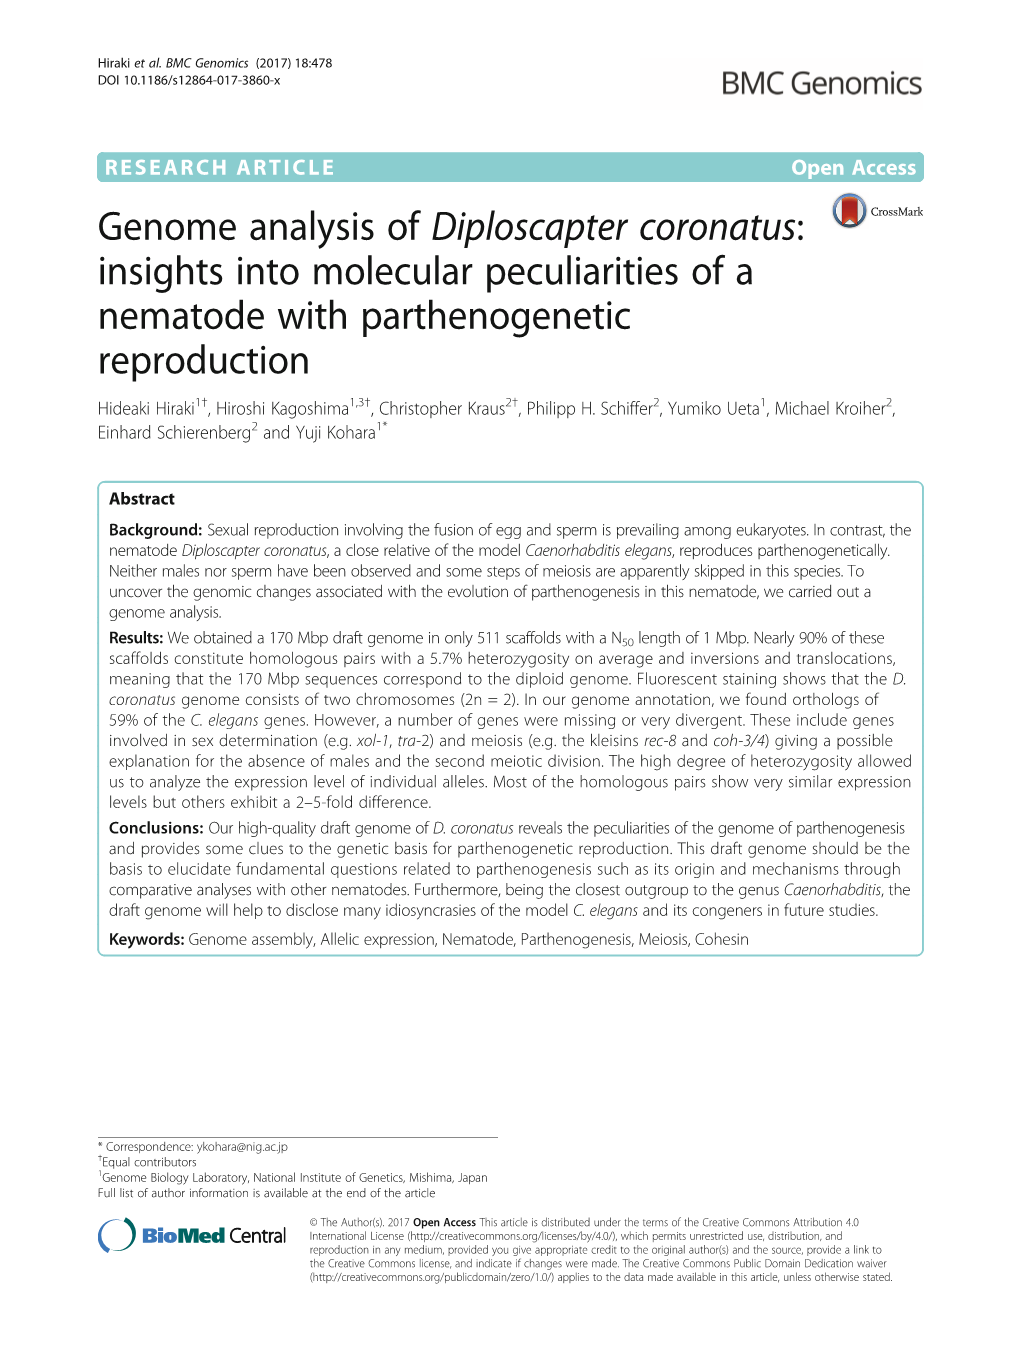 Genome Analysis of Diploscapter Coronatus